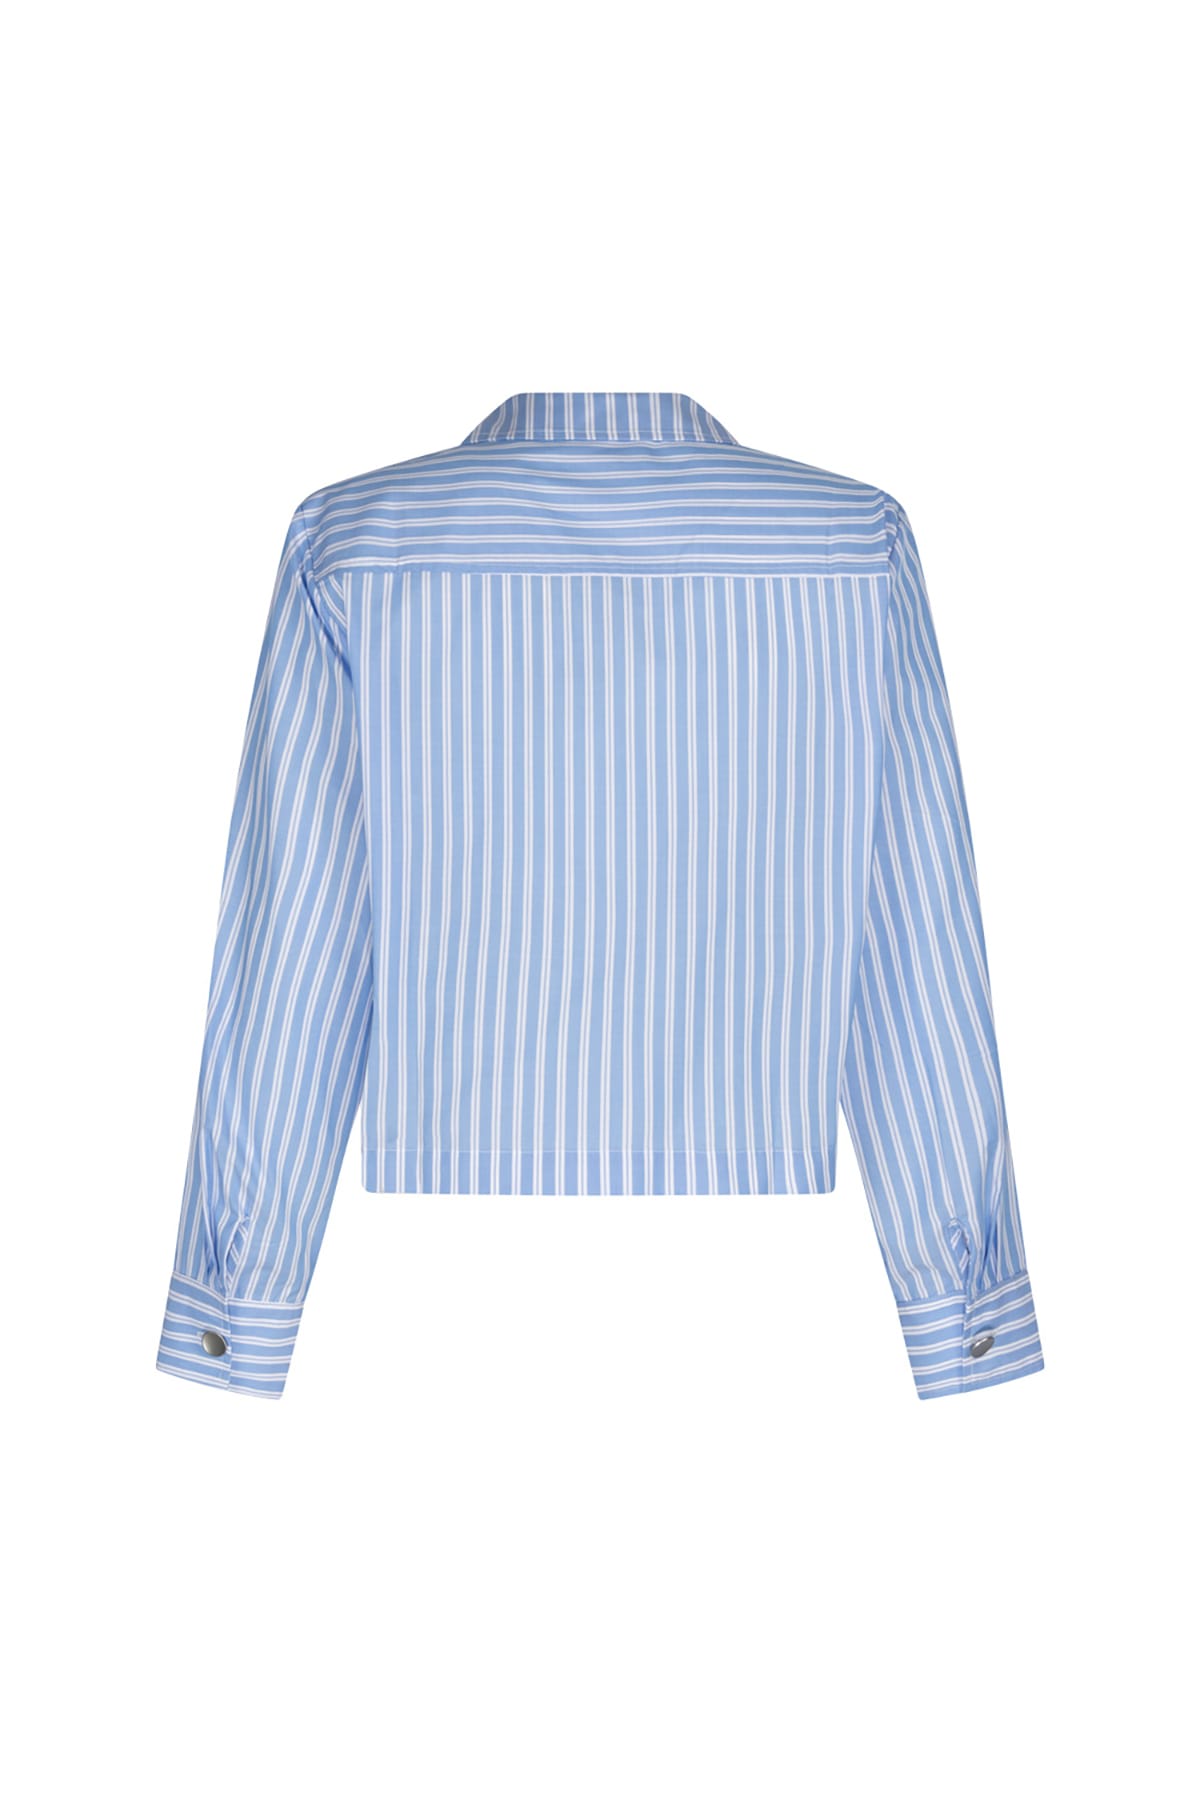 Bluse Elsie top l/s Blue white stripe Bluse Another Label 